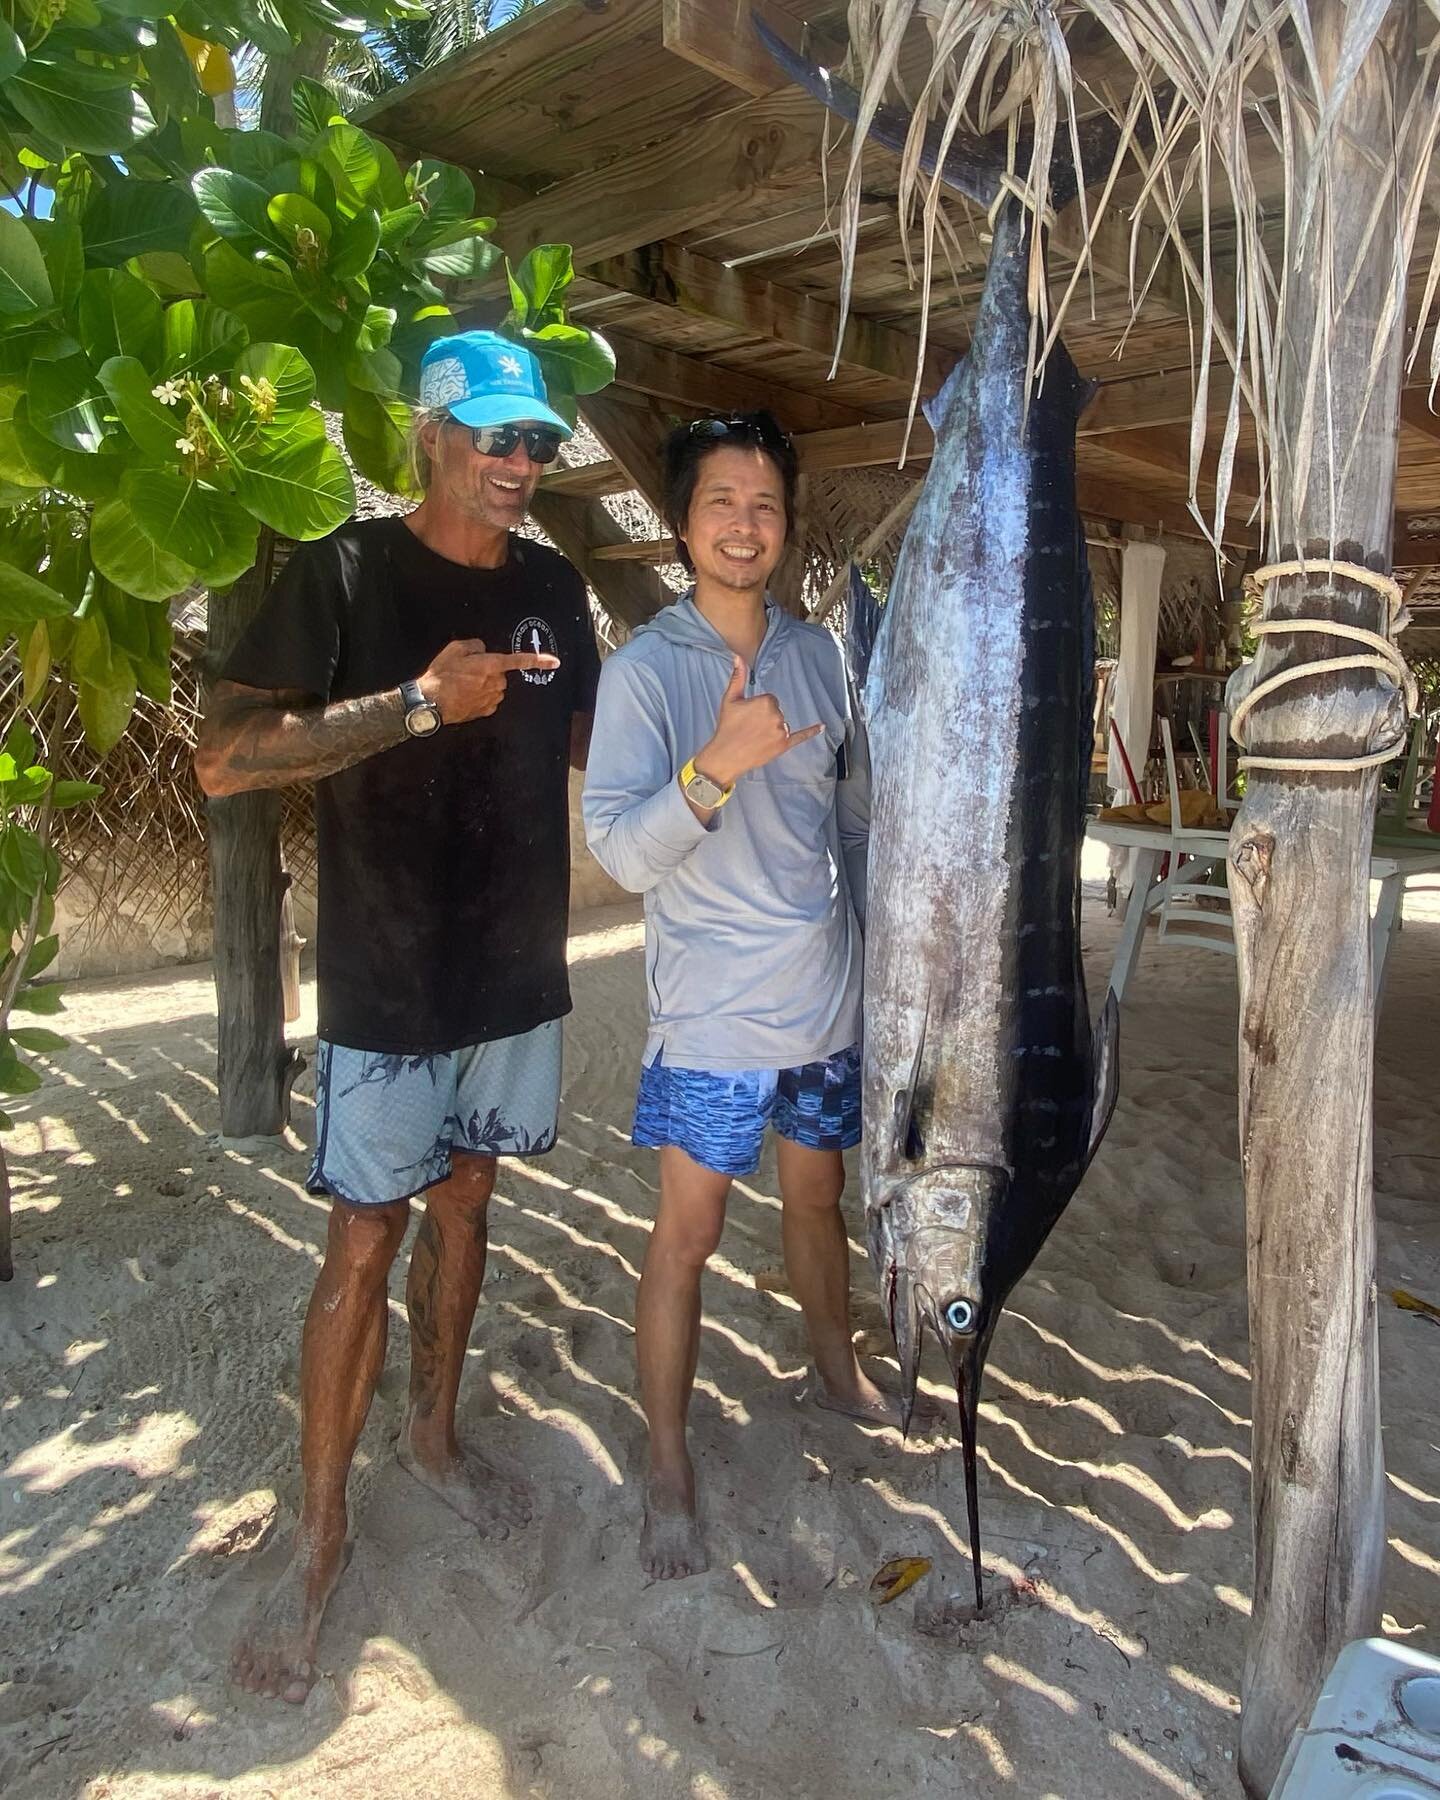 Patrick catch his first marlin 🐟🎣🐠🐡 good job, see you next for a bigger one 
.
#fishing #tikehau #tahiti #moorea #travelphotography #traveldestination